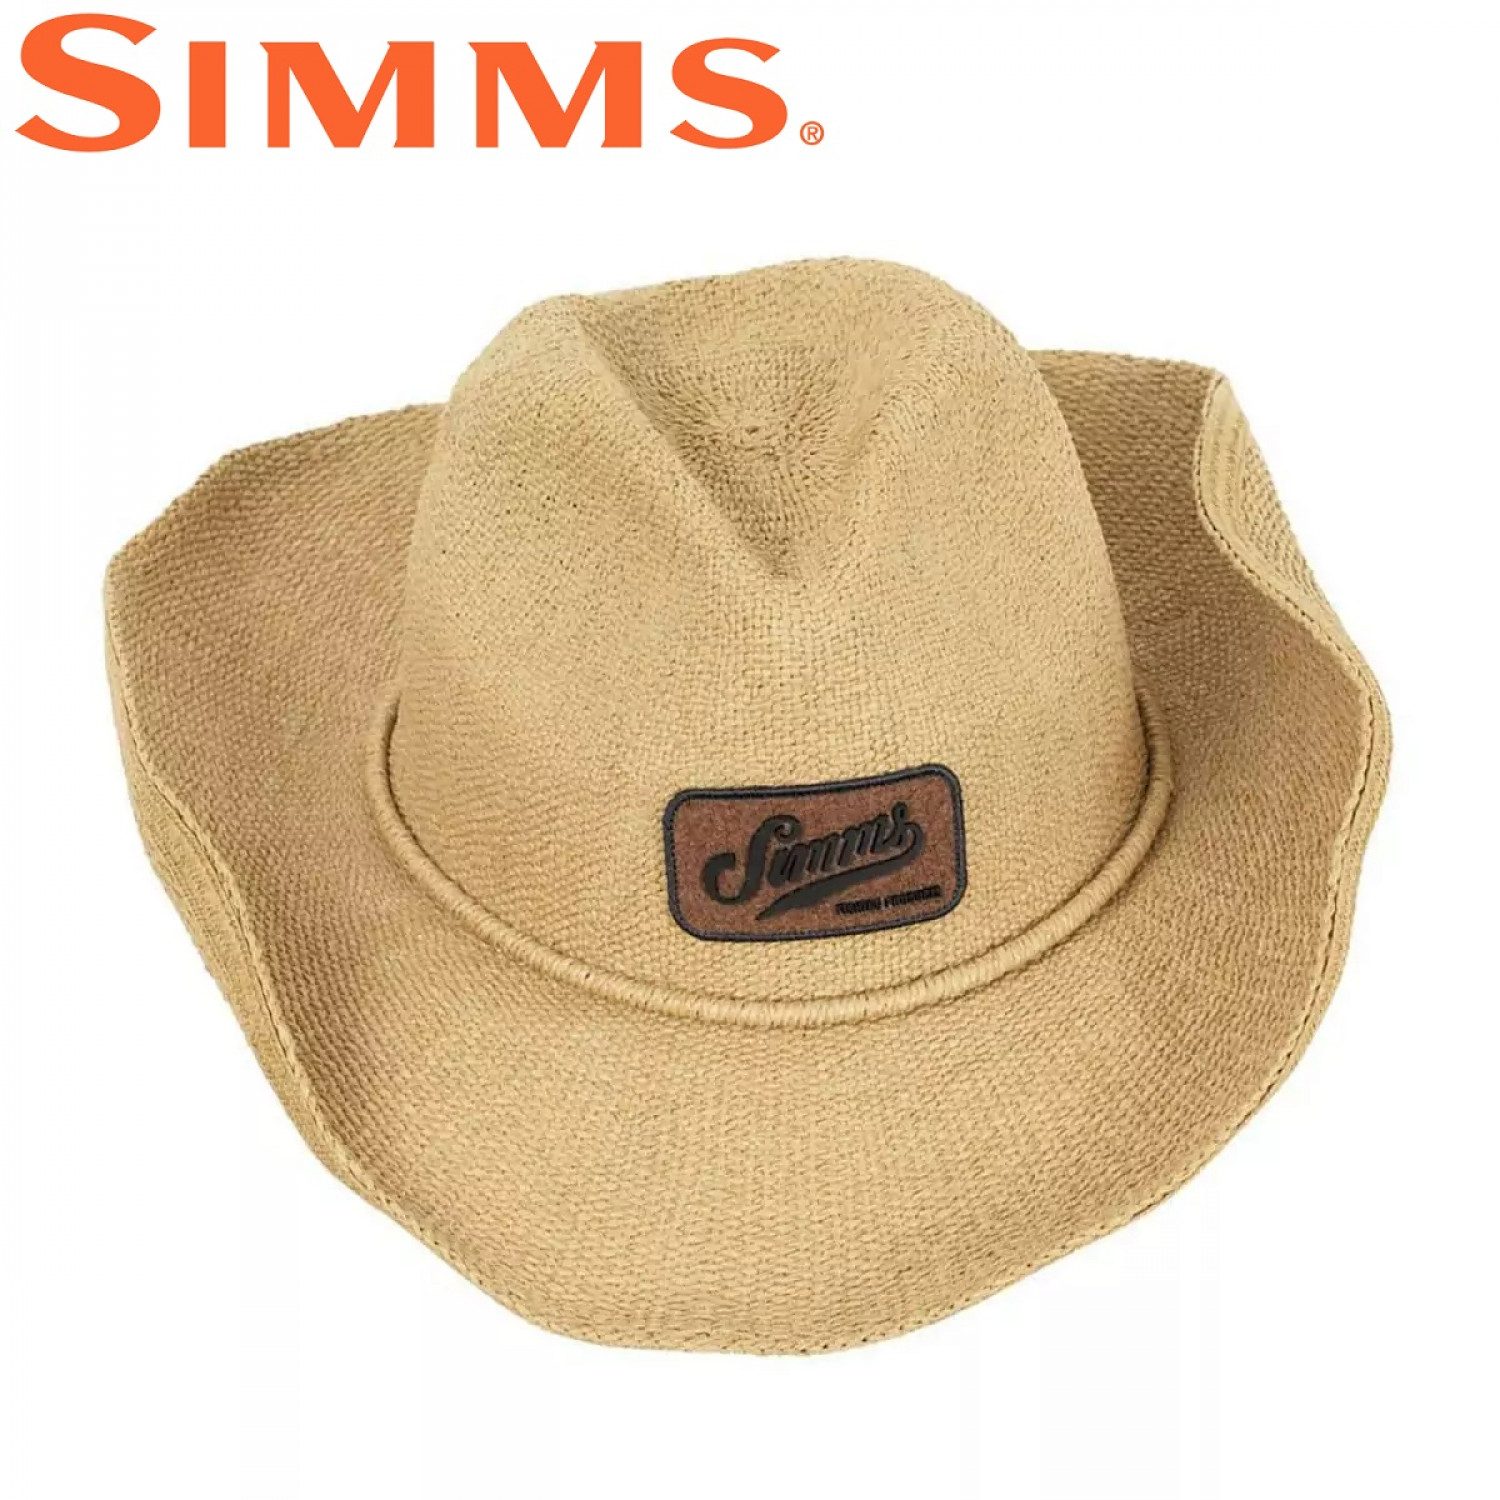 Simms Cutbank Sun Hat (Toffee)